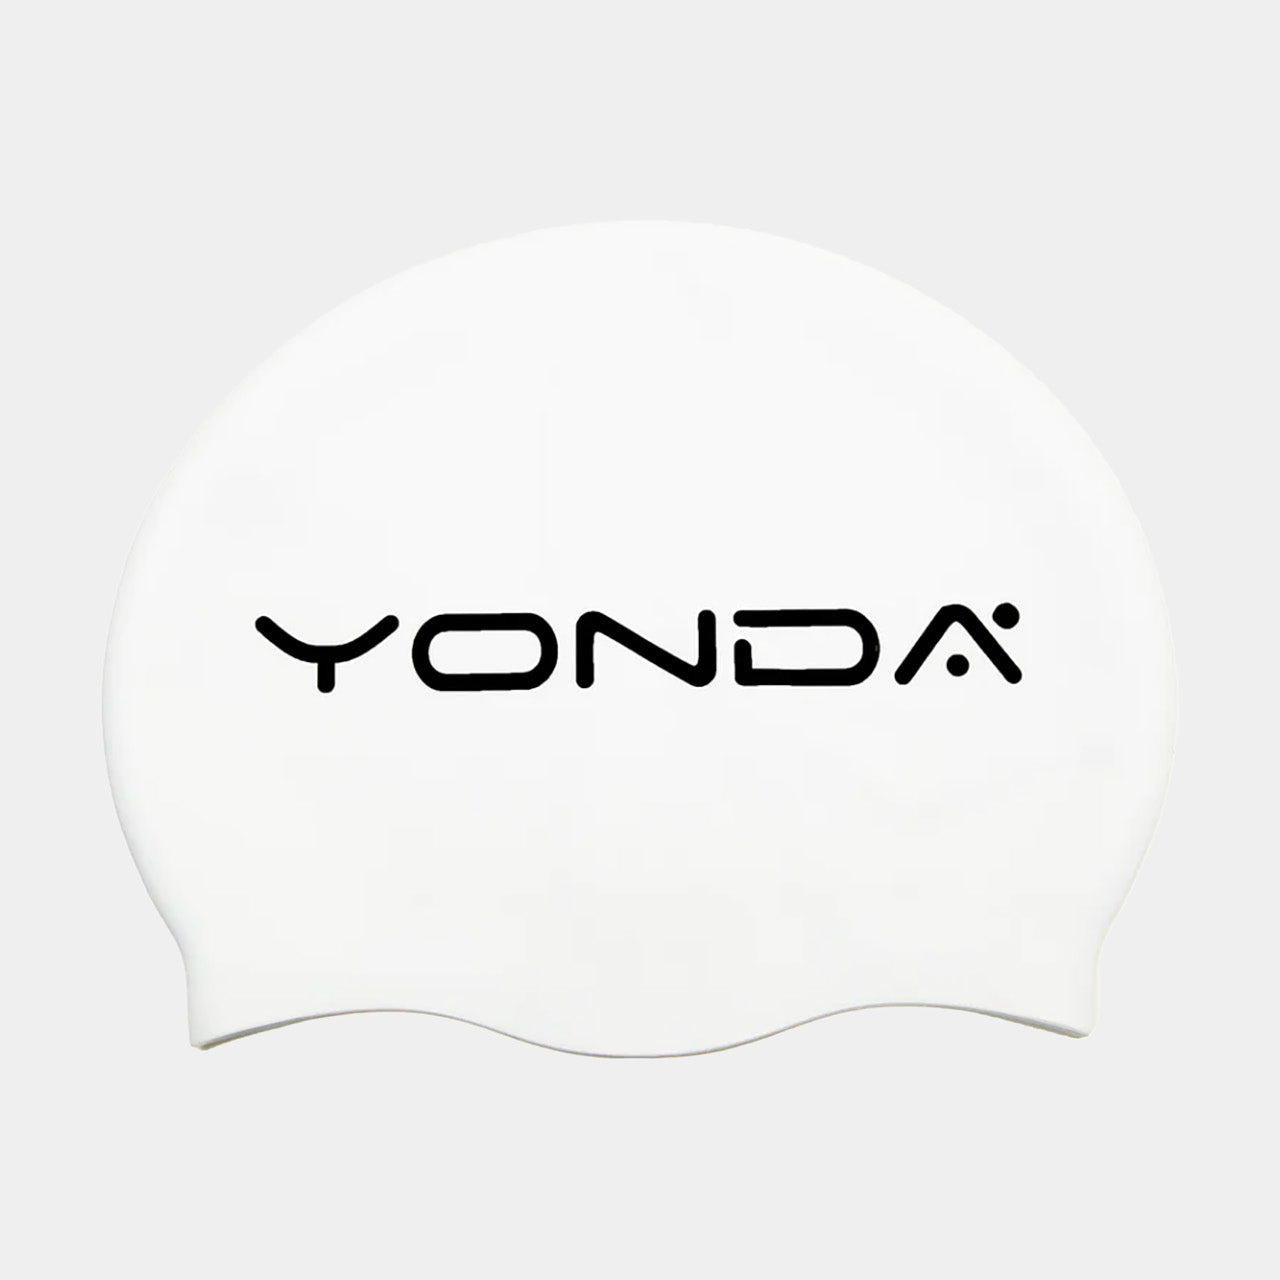 Yonda Silicone Swim Cap - White